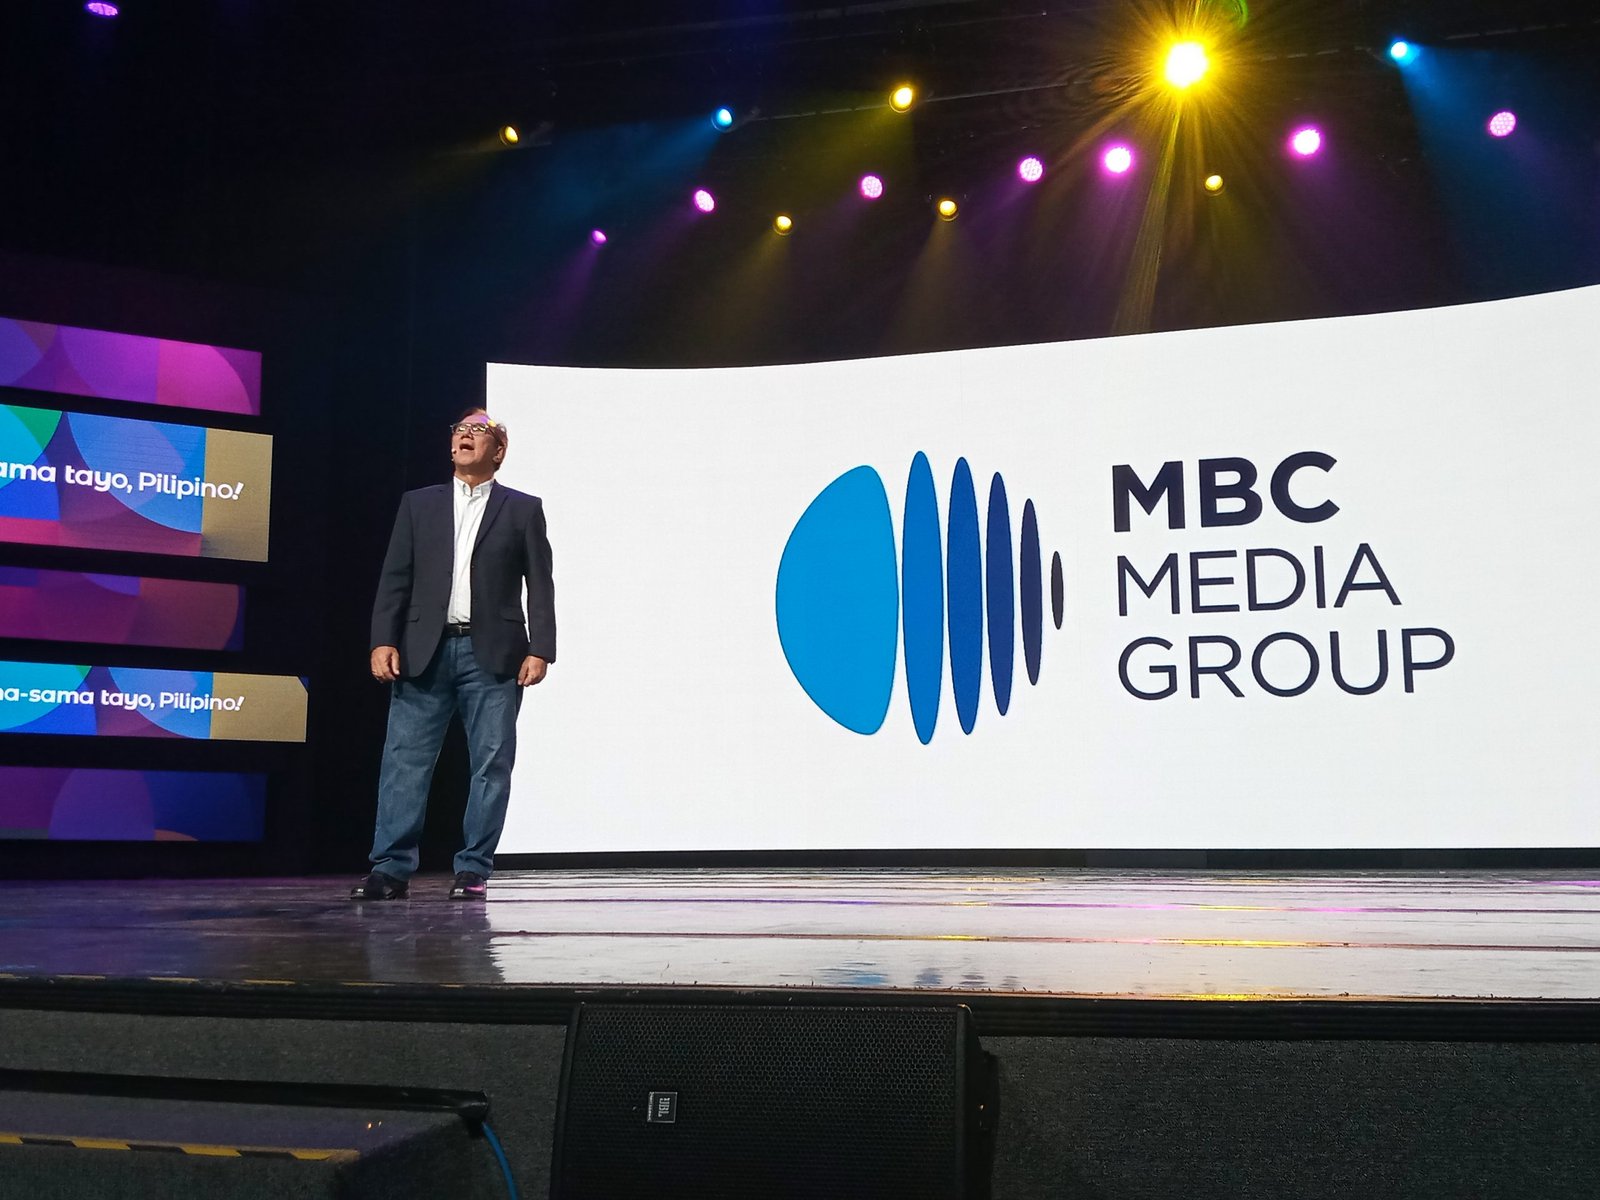 Manila Broadcasting Company is now MBC Media Group